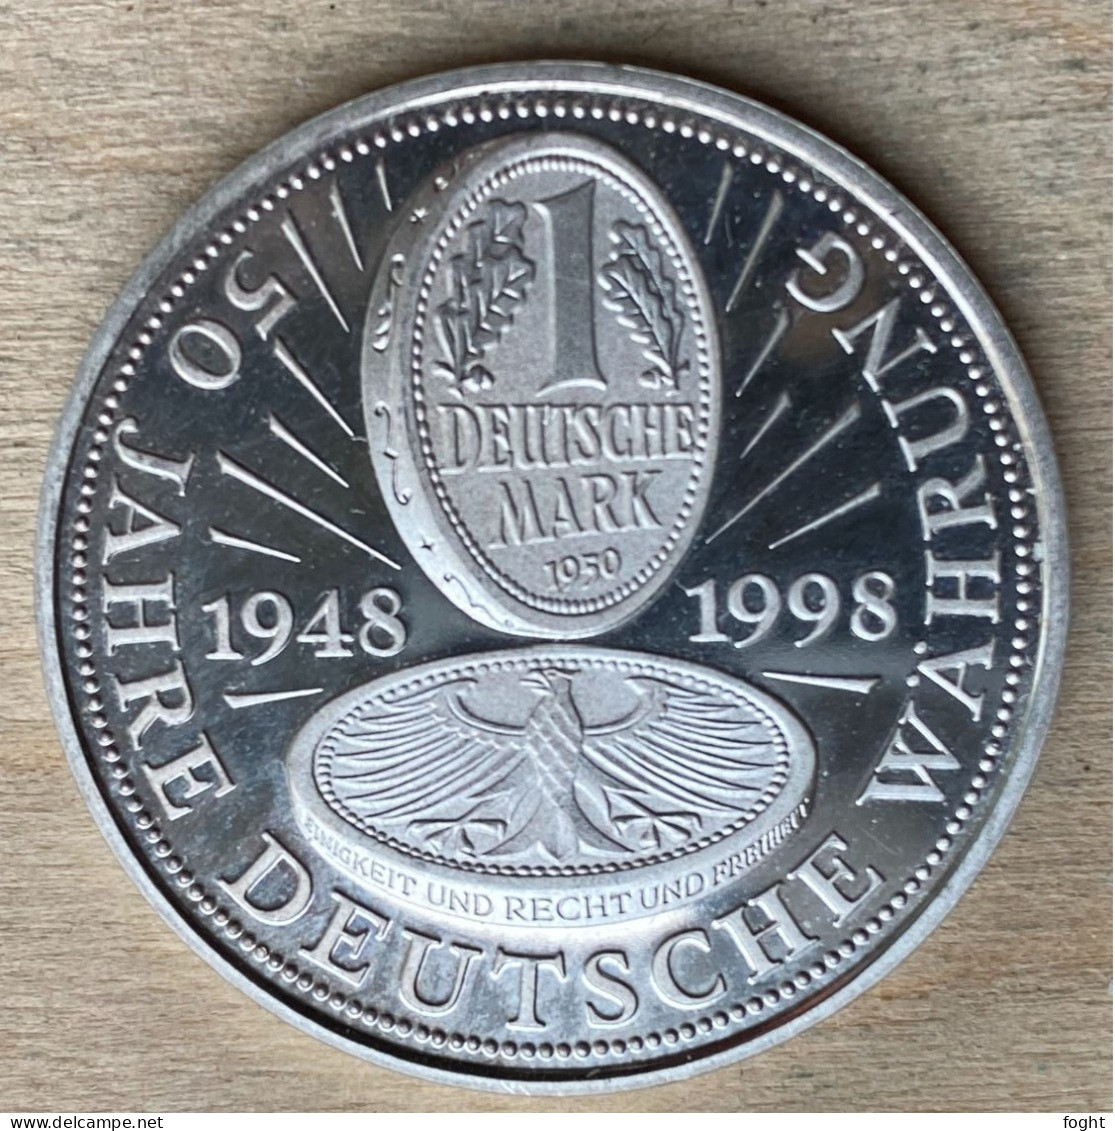 1998 Germany /BRD Medaille  50 Jahre Deutsche Währung .500 Silber,PP,7225 - Professionali/Di Società